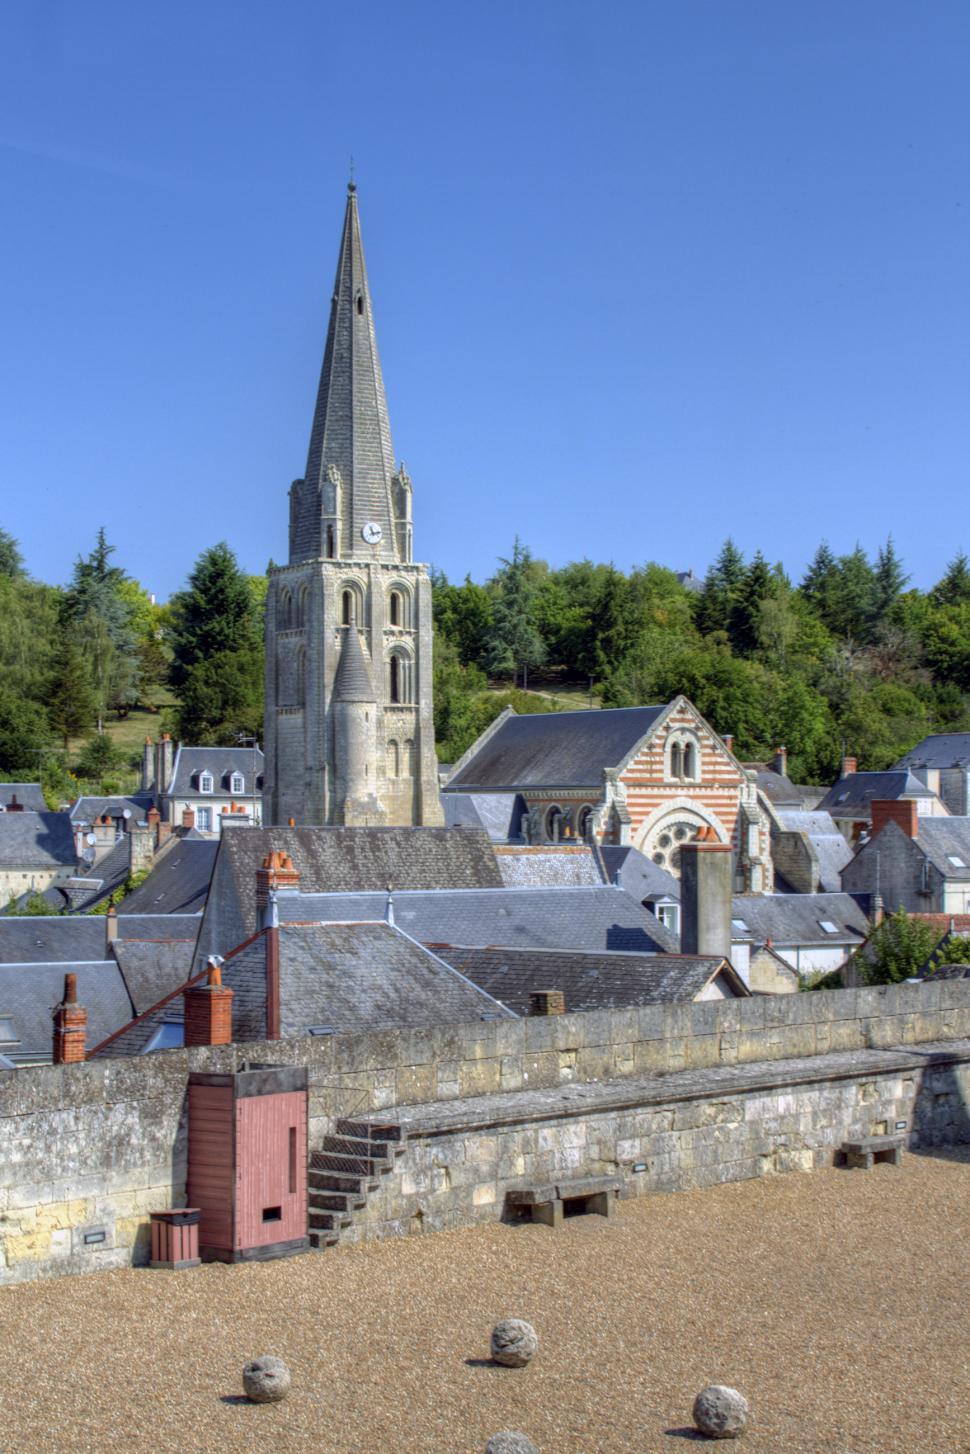 Free Image of Chateau de Langeais 